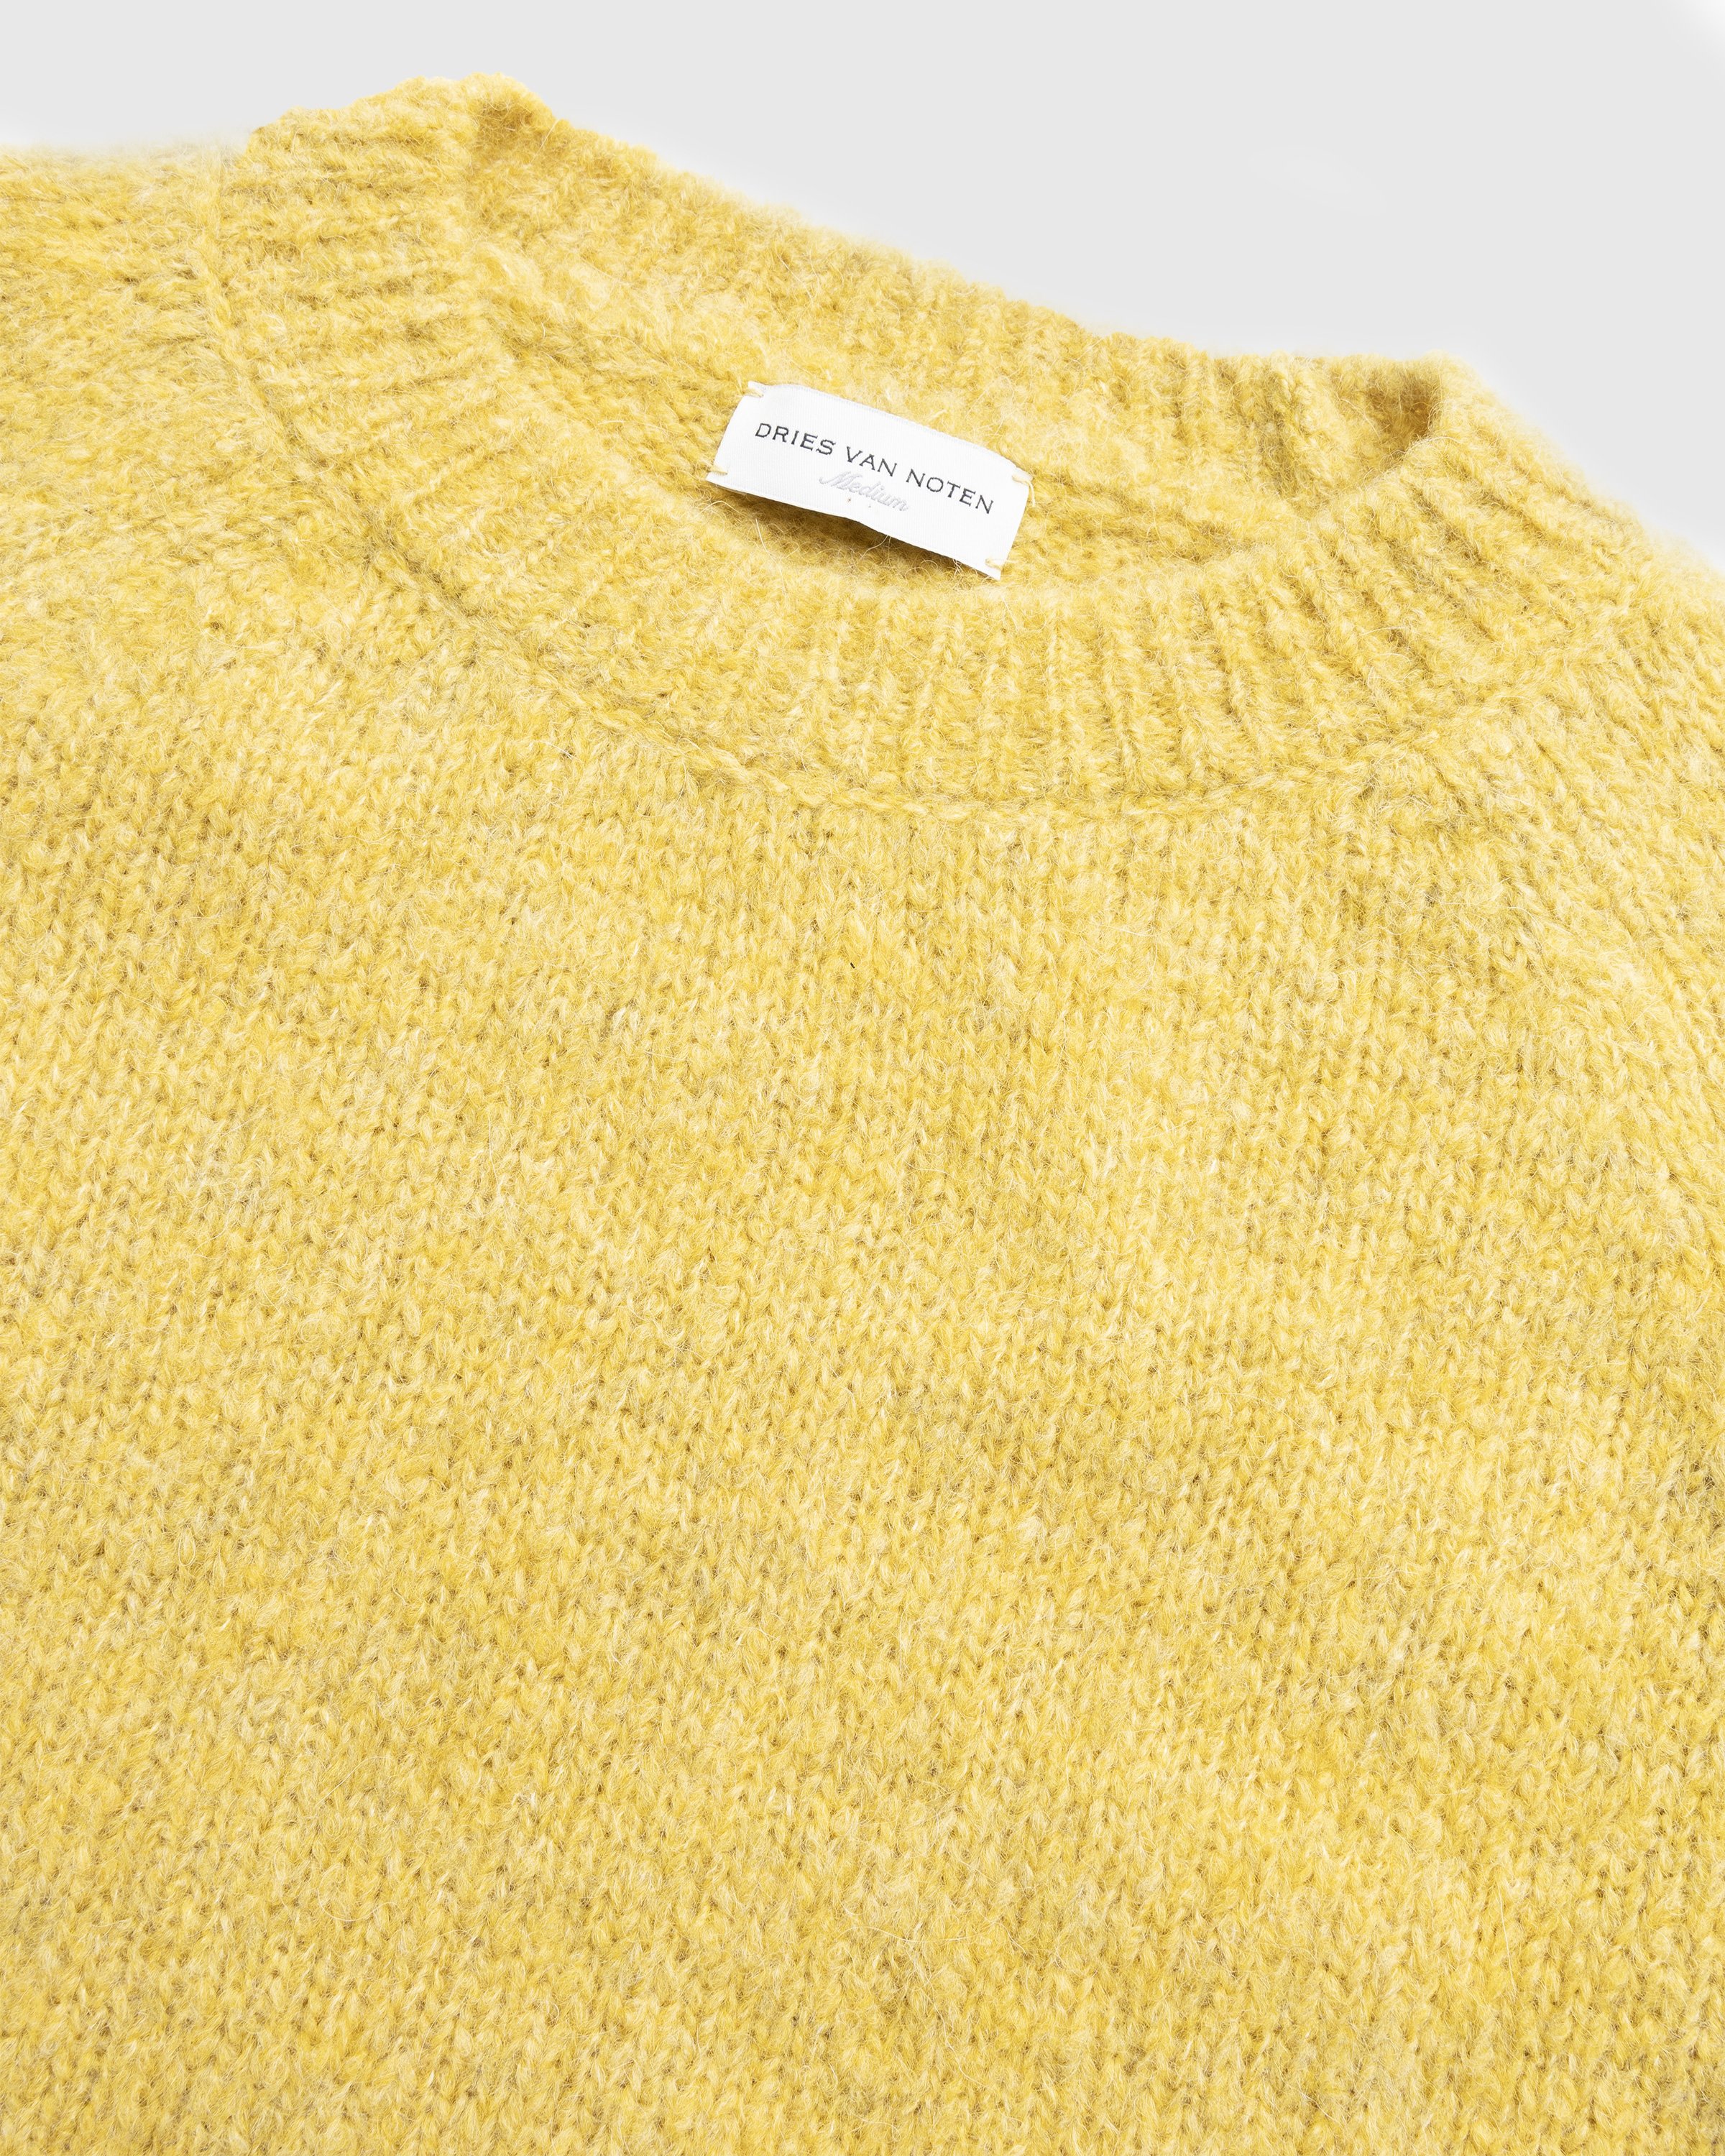 Dries van Noten - Melbourne Knit Yellow - Clothing - Yellow - Image 5